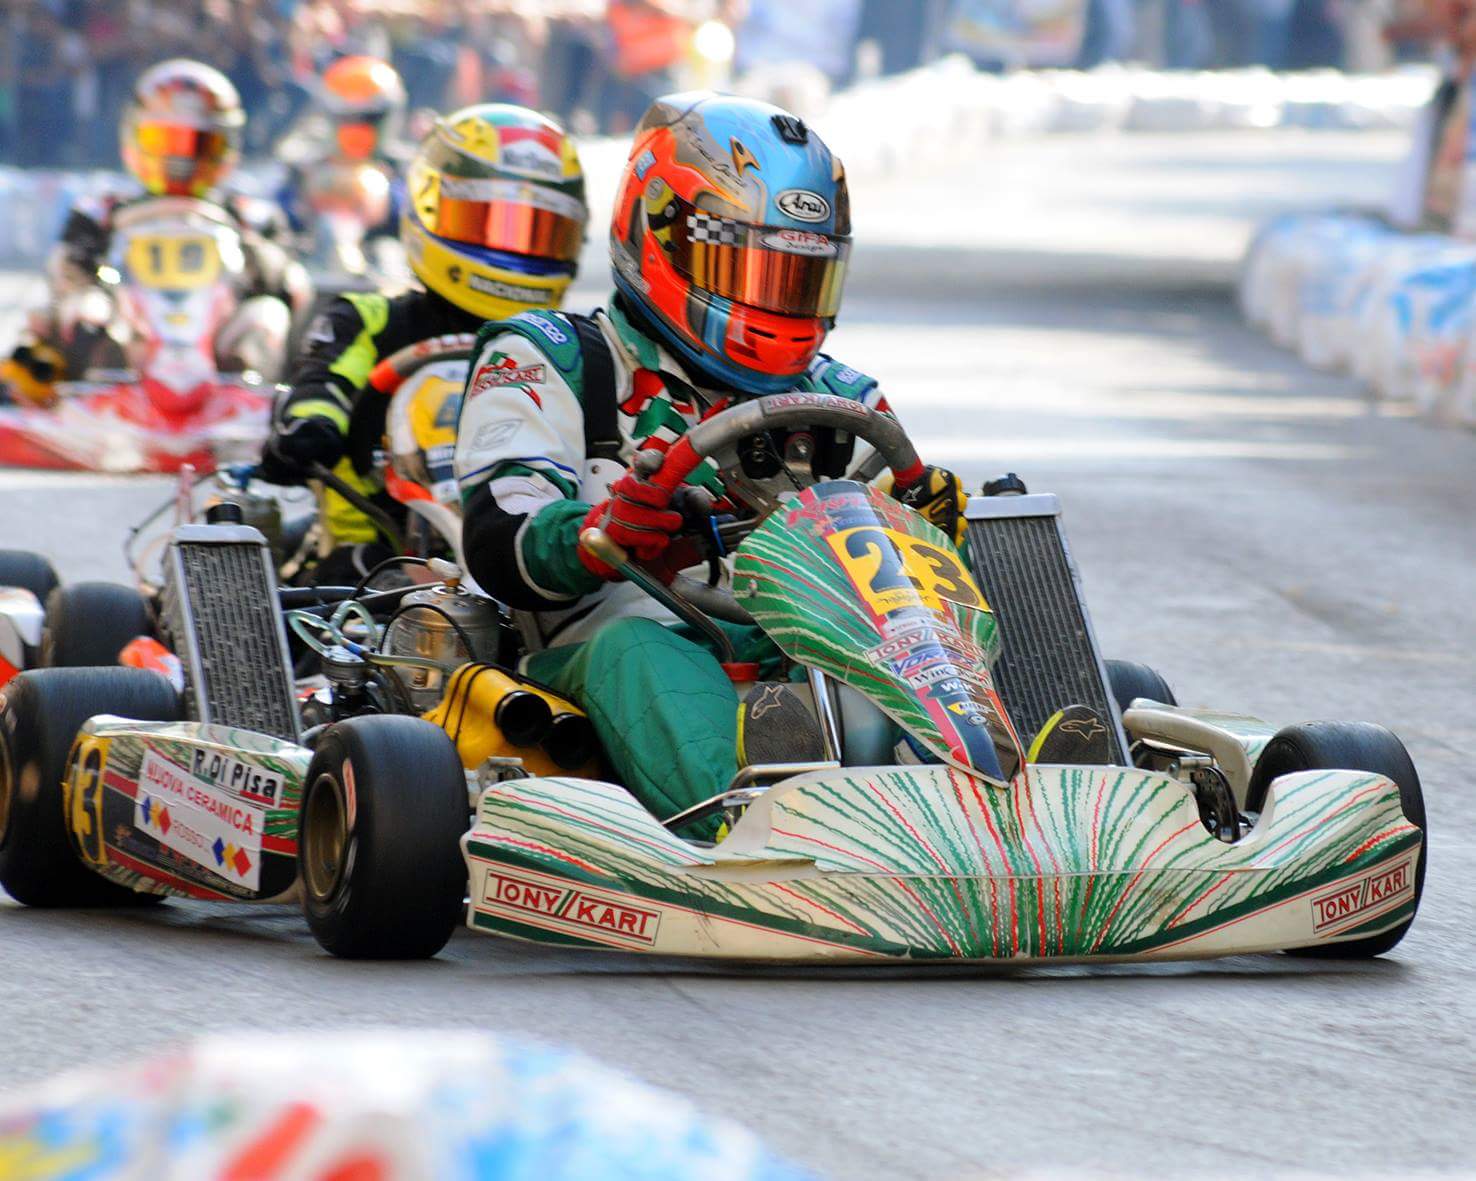 Di Pisa sfiora la vittoria nei campionati Kart